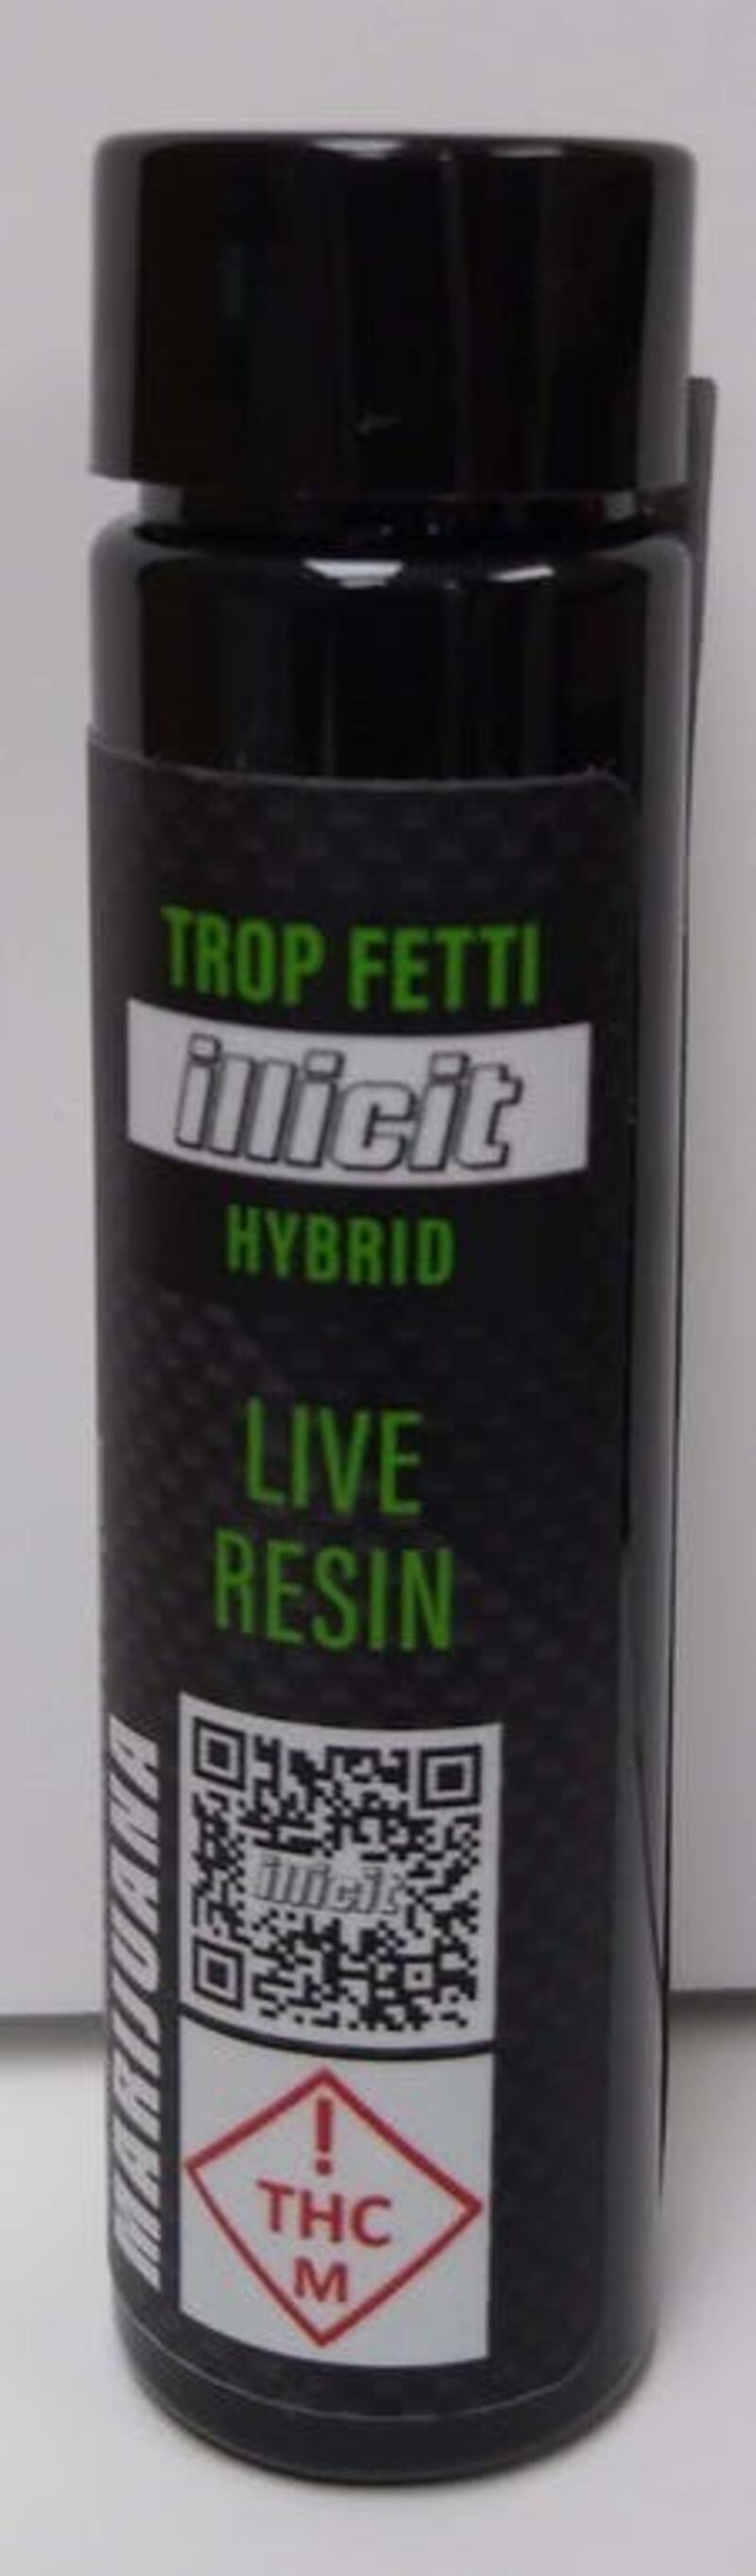 Illicit Trop Fetti Live Resin Cart .5g